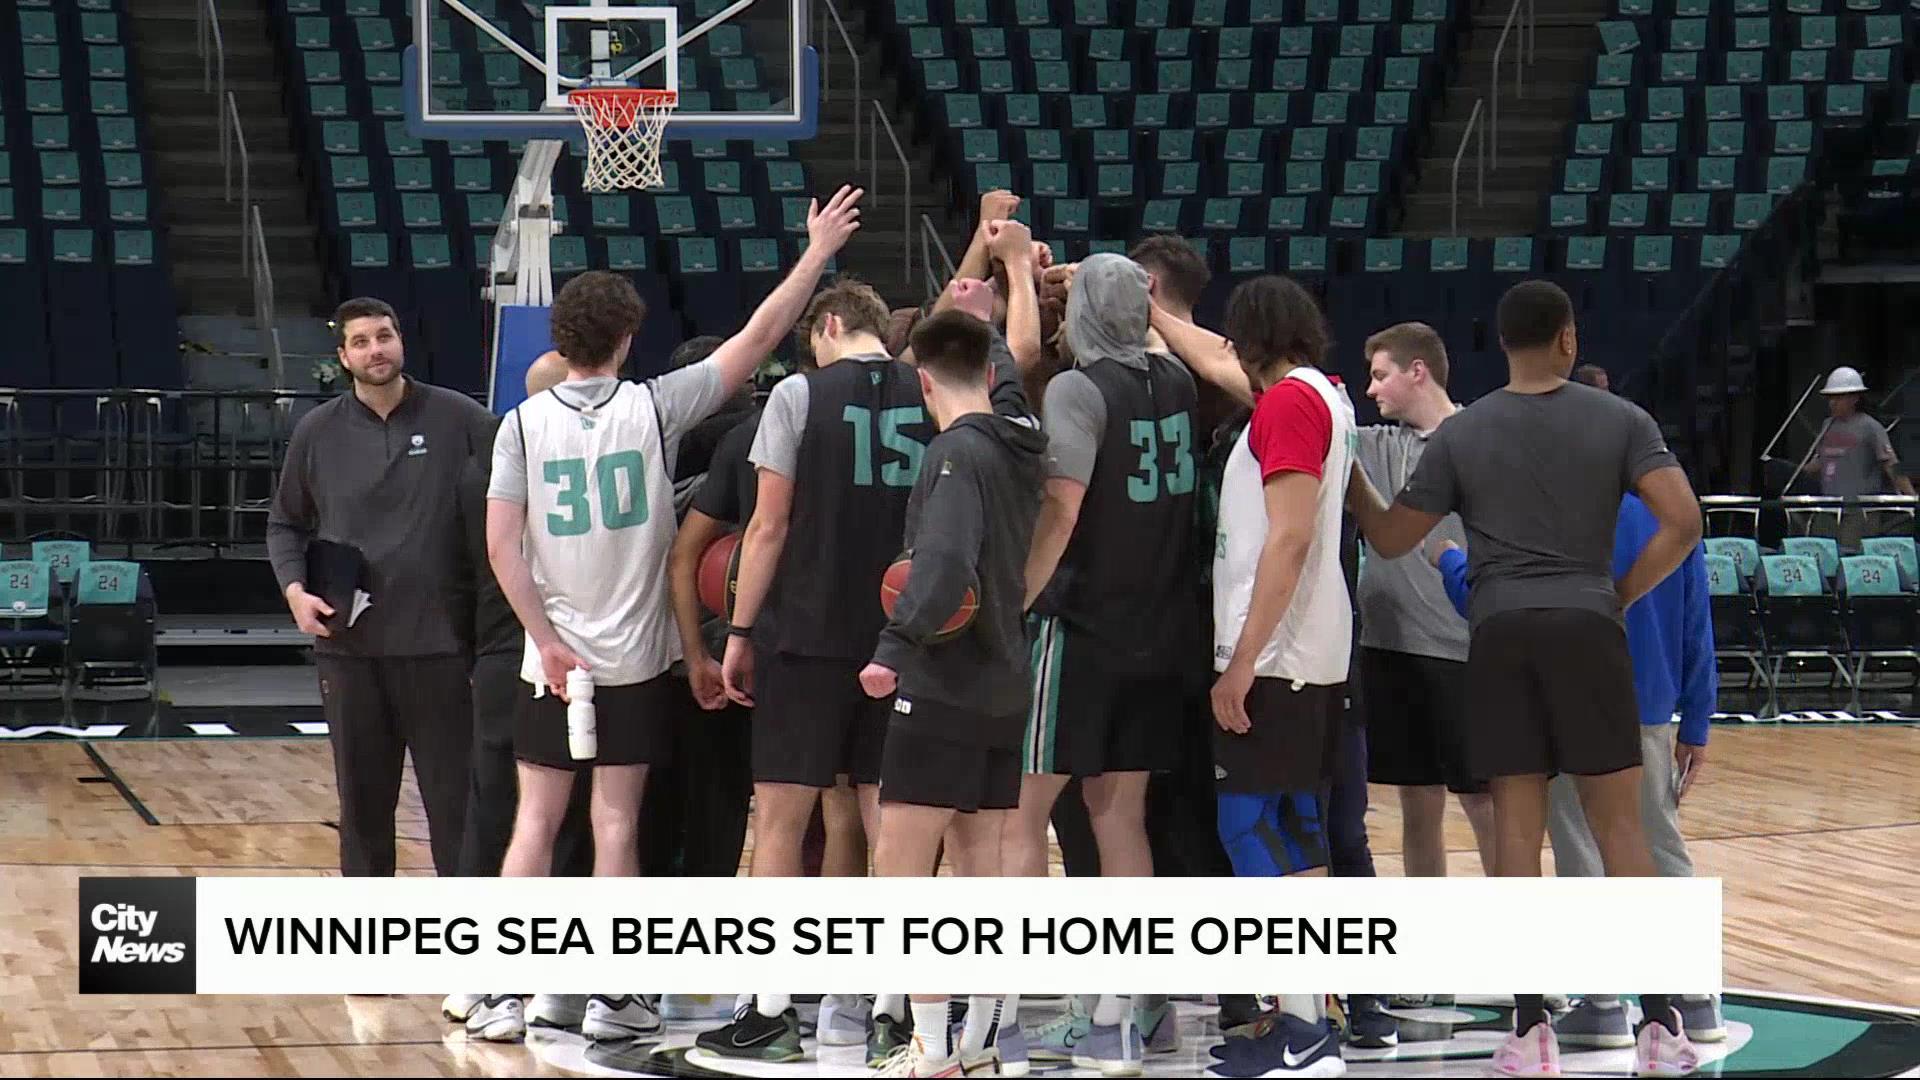 Pro Hoops returns to Winnipeg with Sea Bears home opener